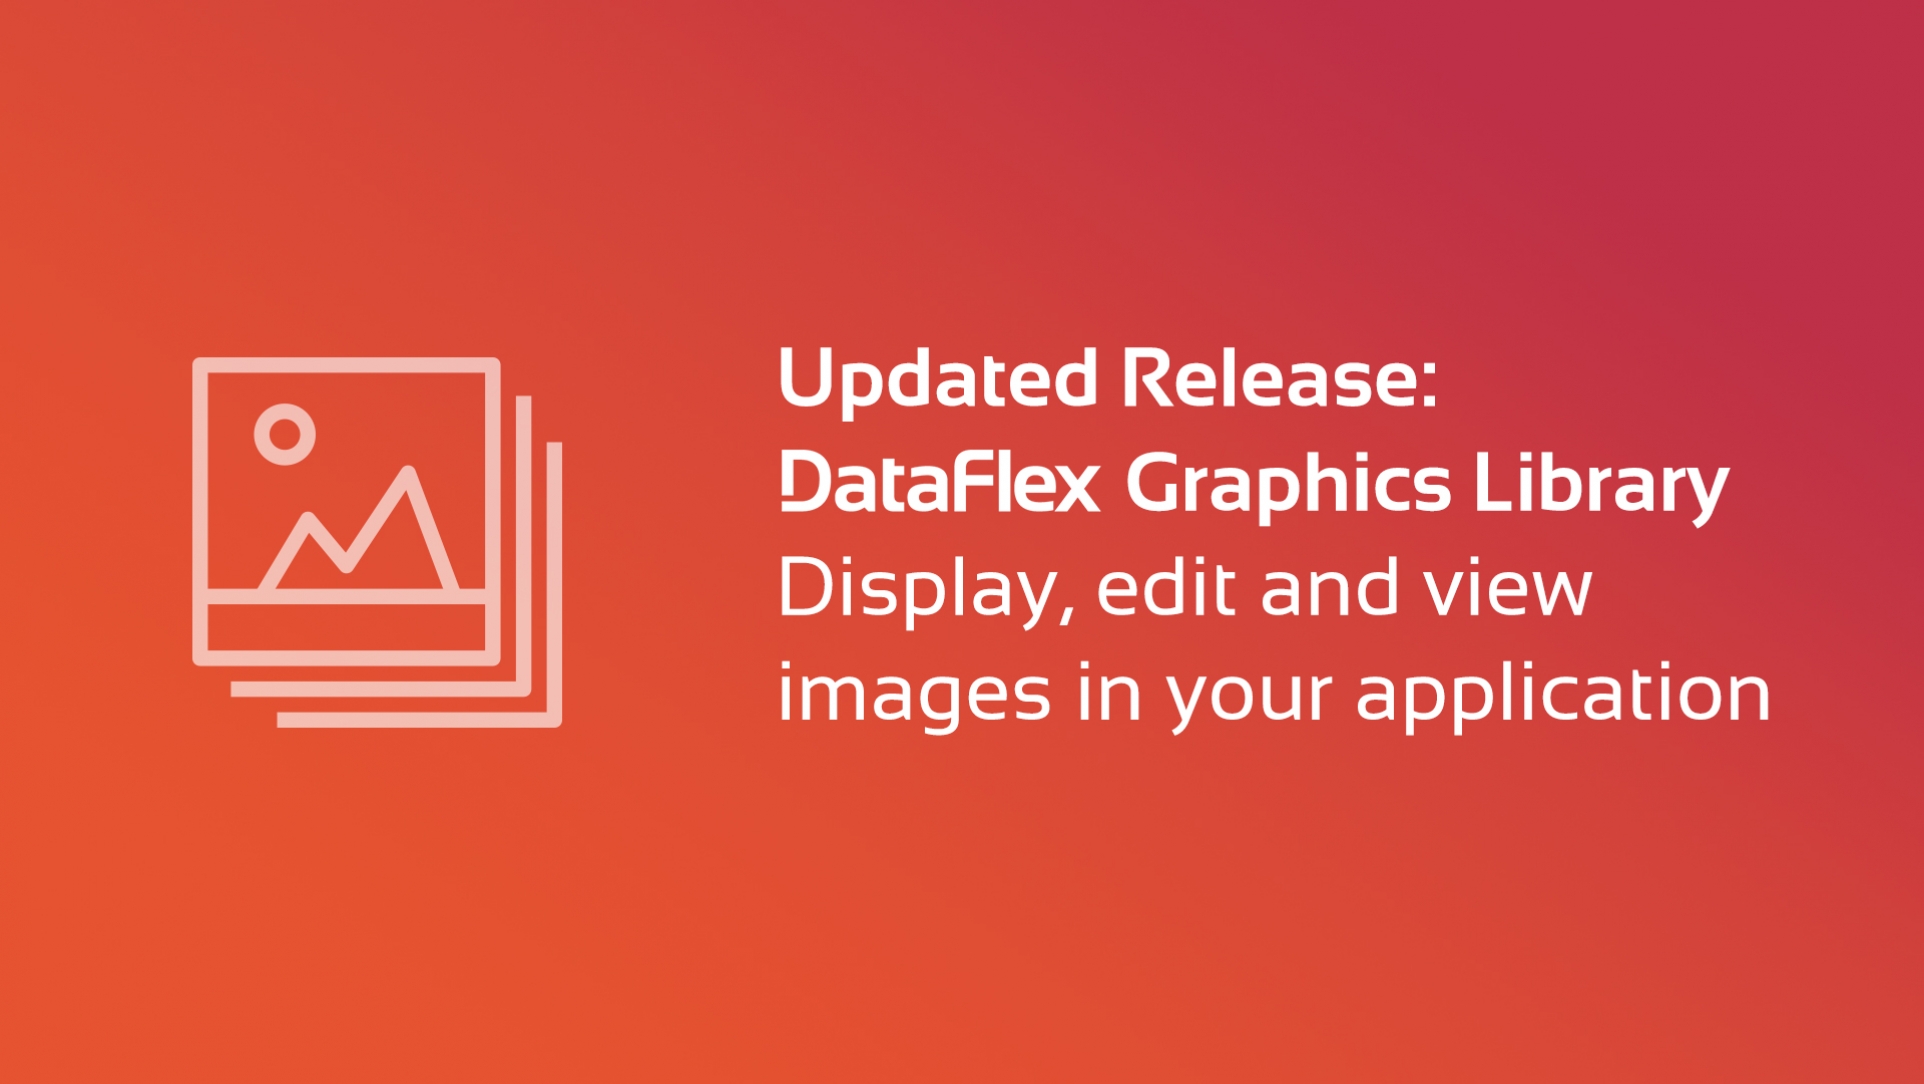 DataFlex Graphics Library